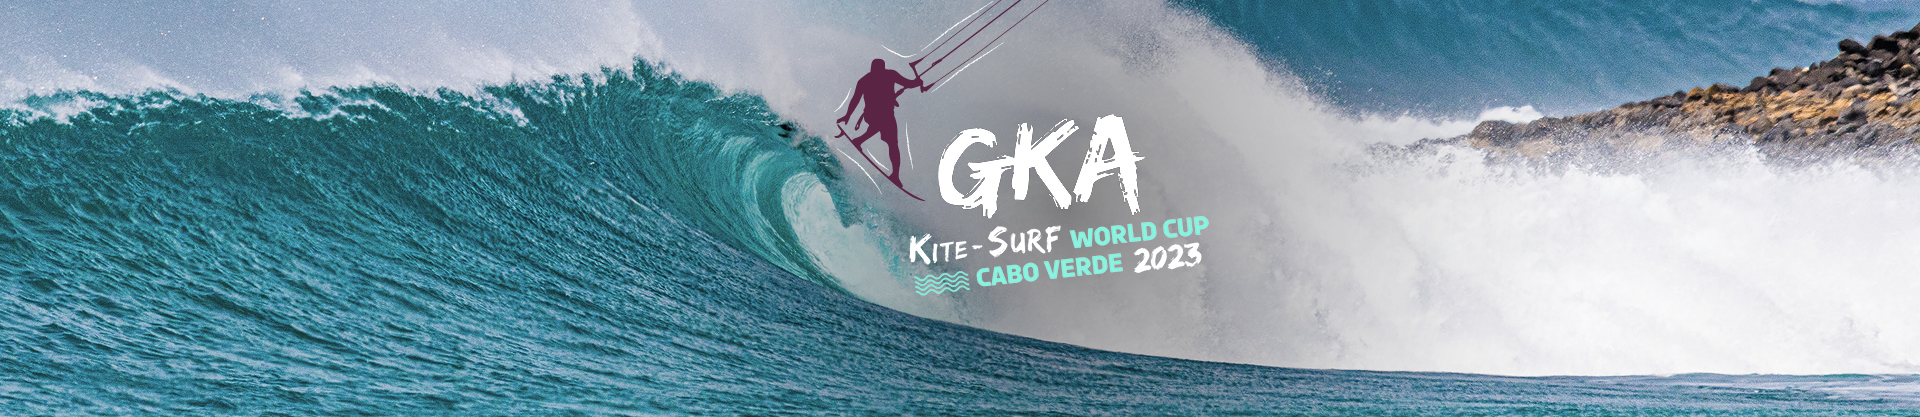 Image for GKA Kite-Surf World Cup Cape Verde 2023